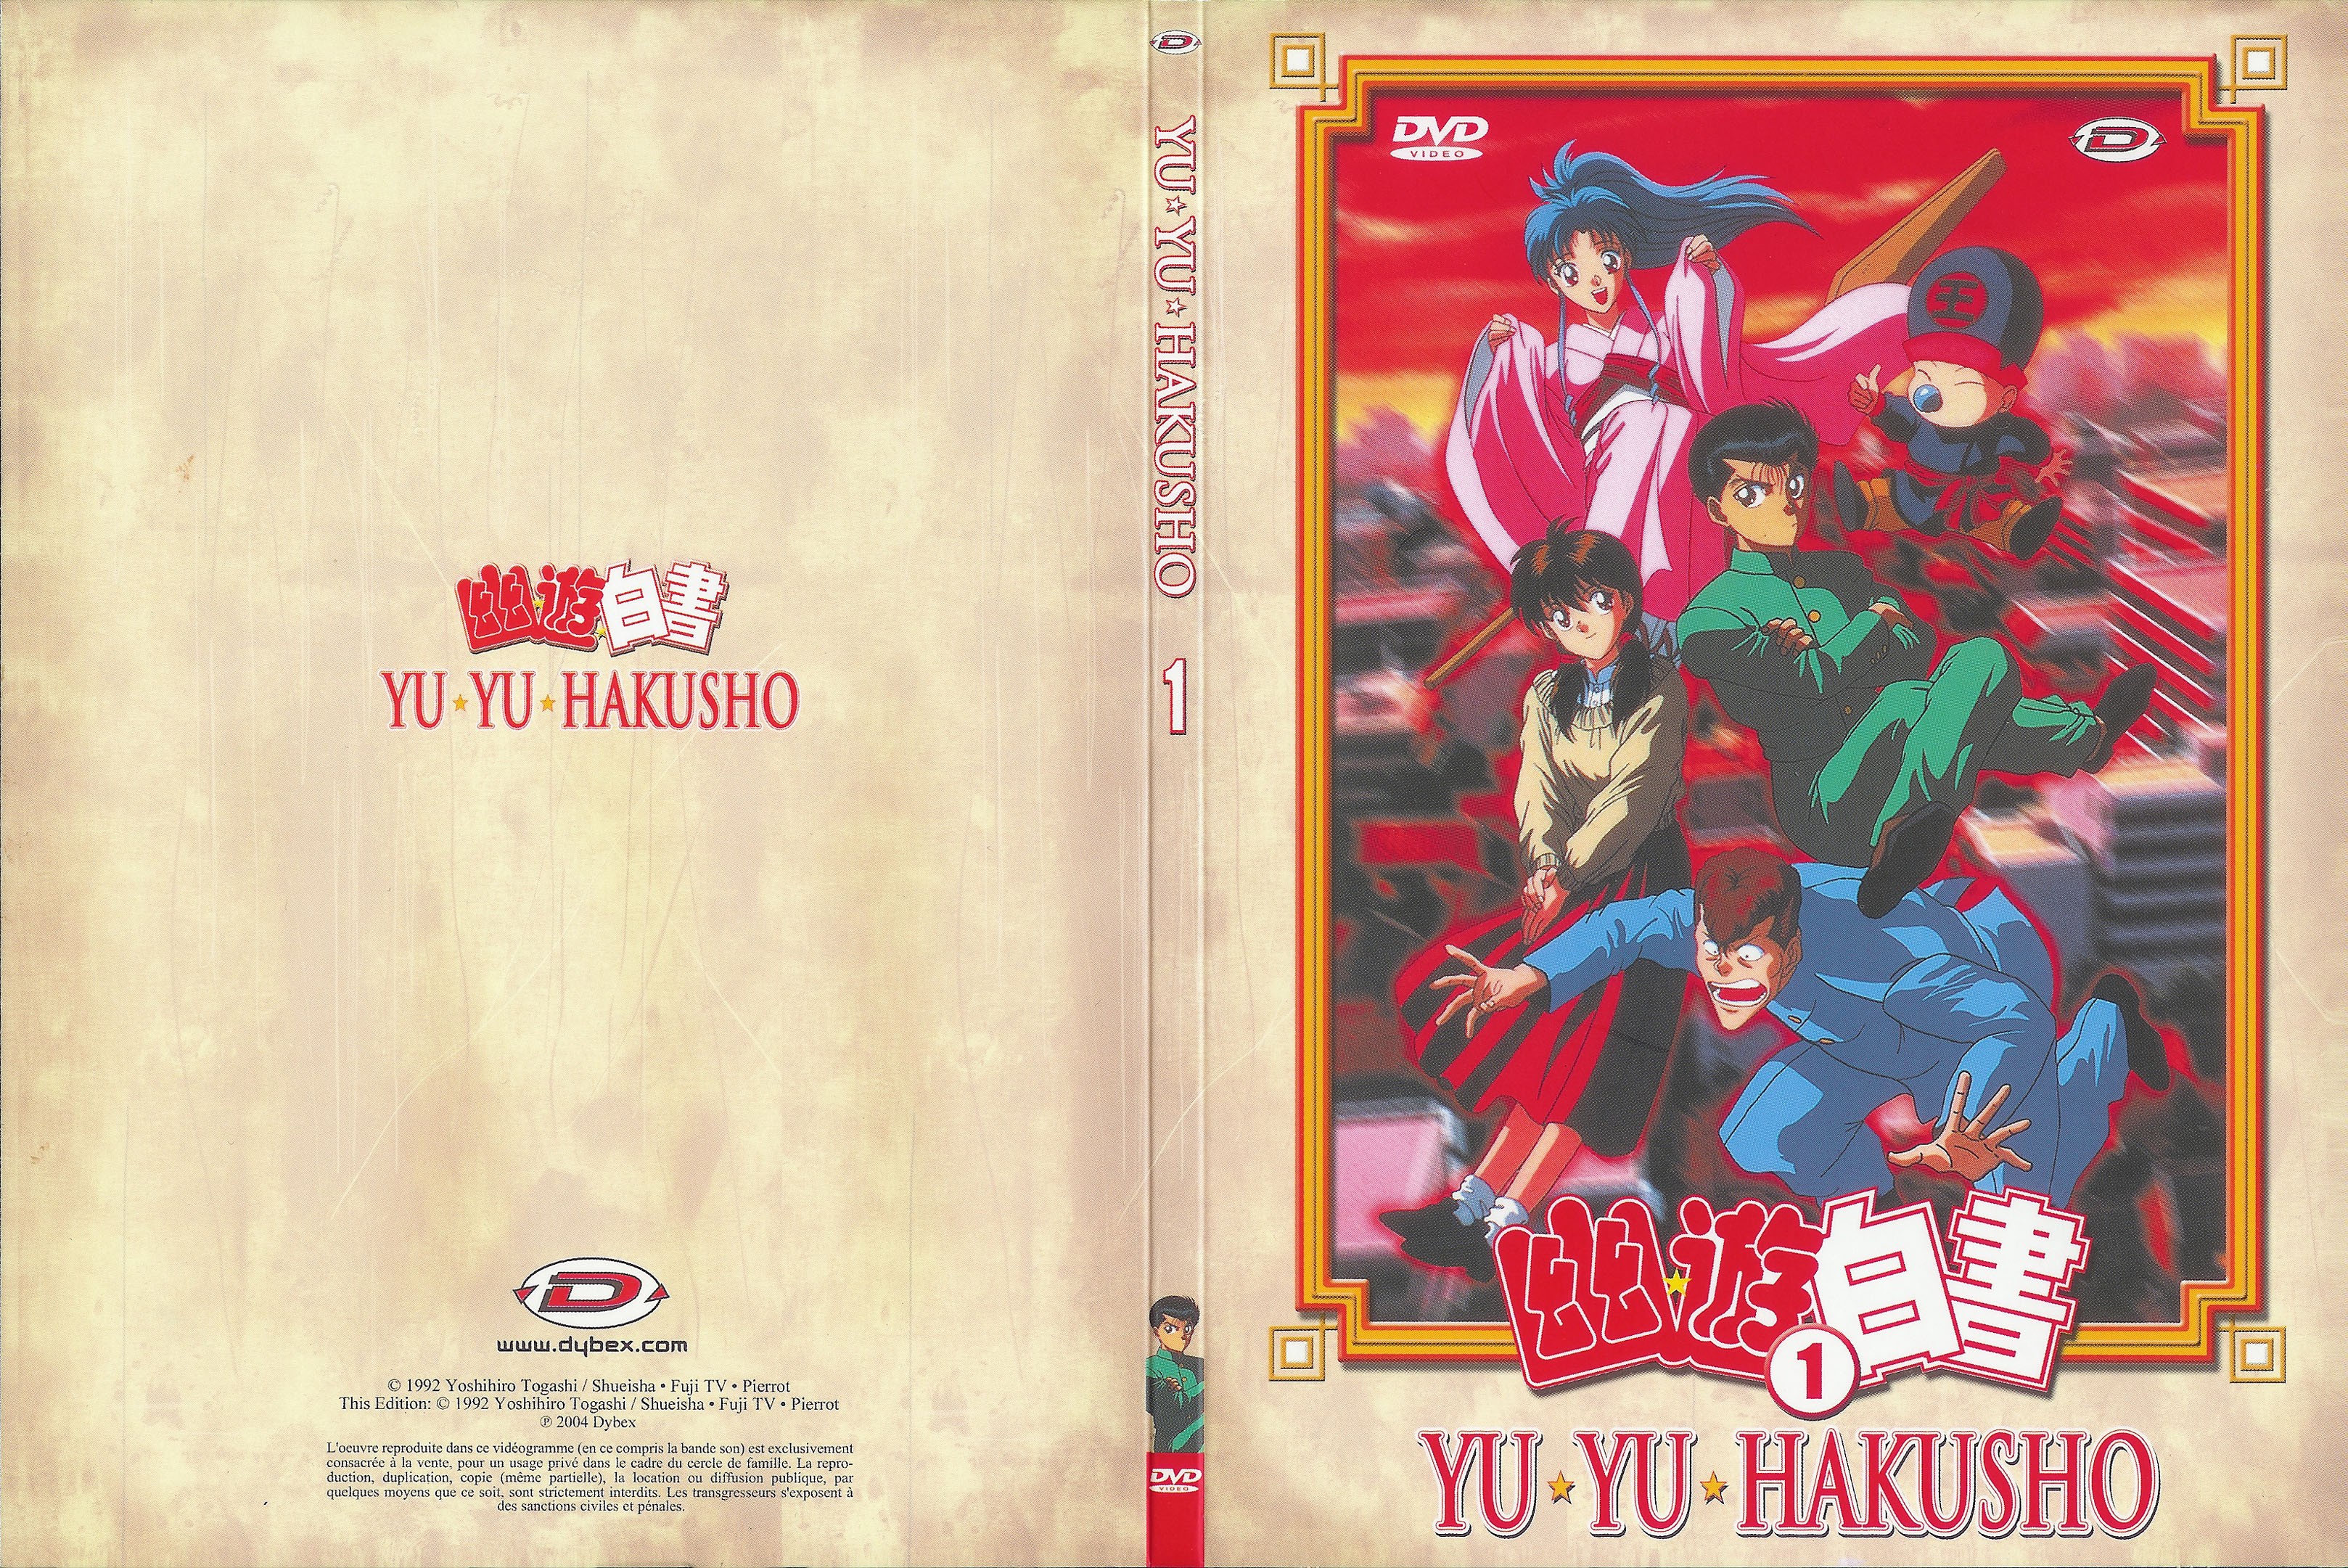 Jaquette DVD Yu yu hakusho vol 01